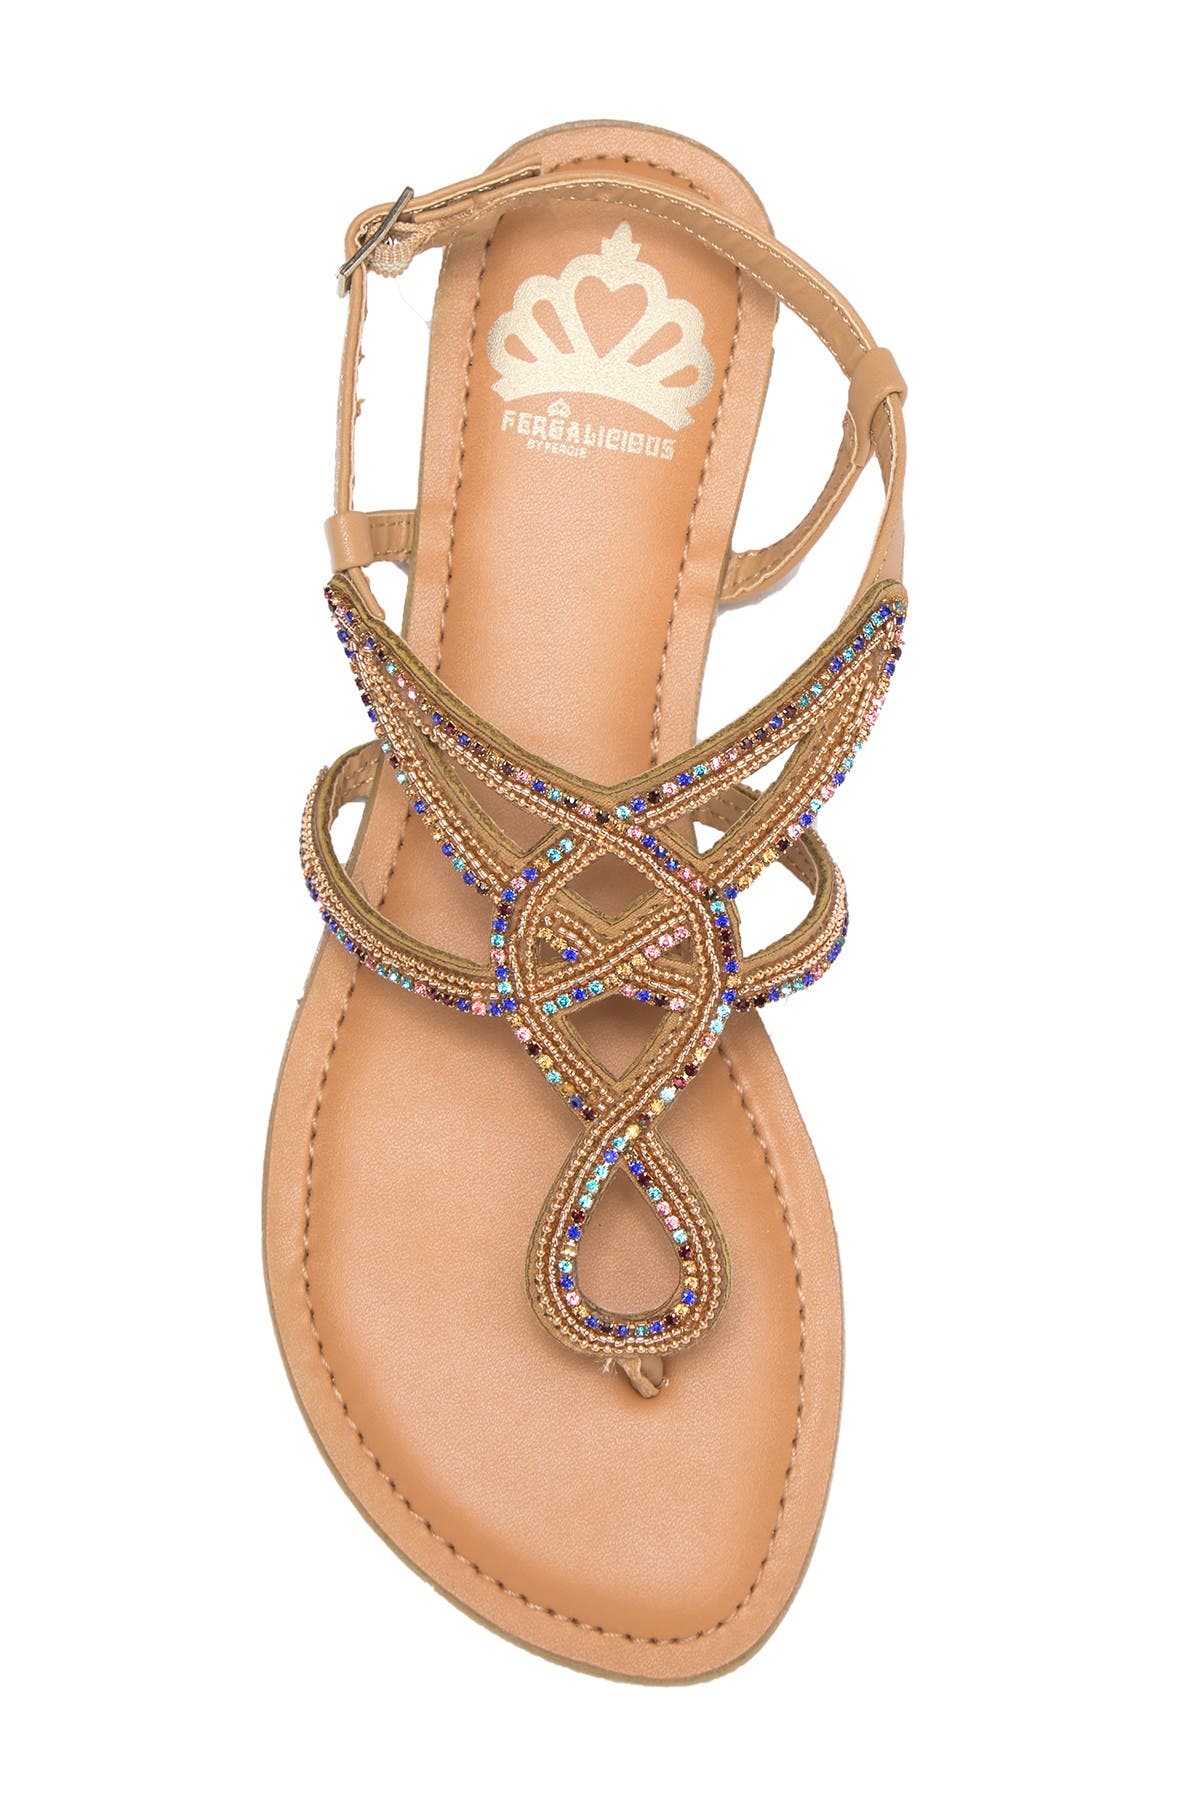 fergalicious sapphire sandal